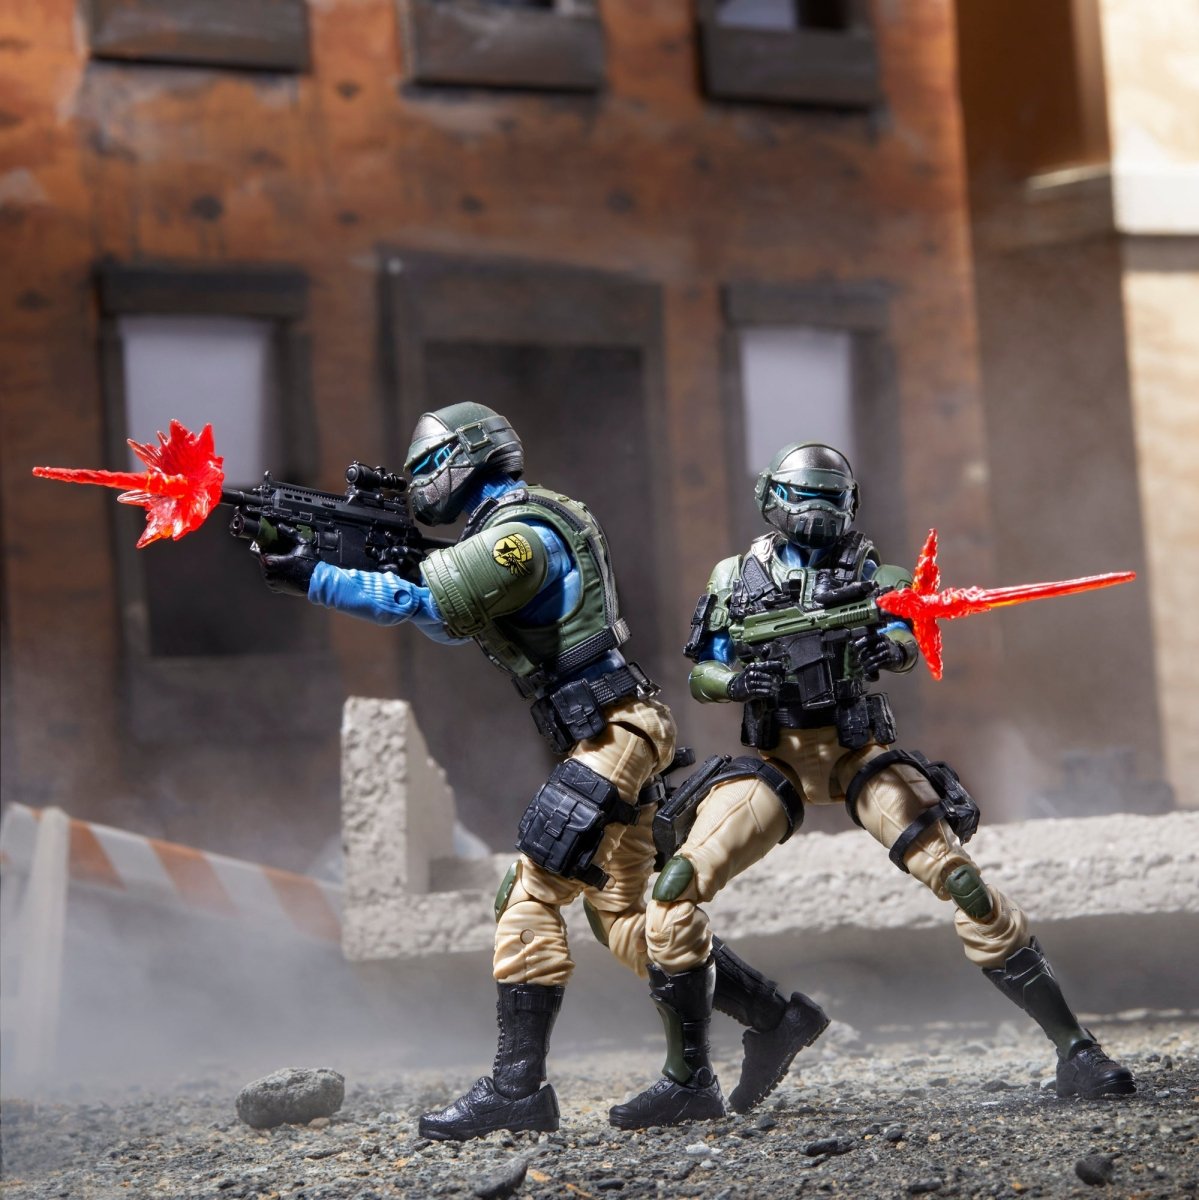 Steel Corps Trooper 2 Pk G.I. Joe Classified Series Action Figures Pop-O-Loco